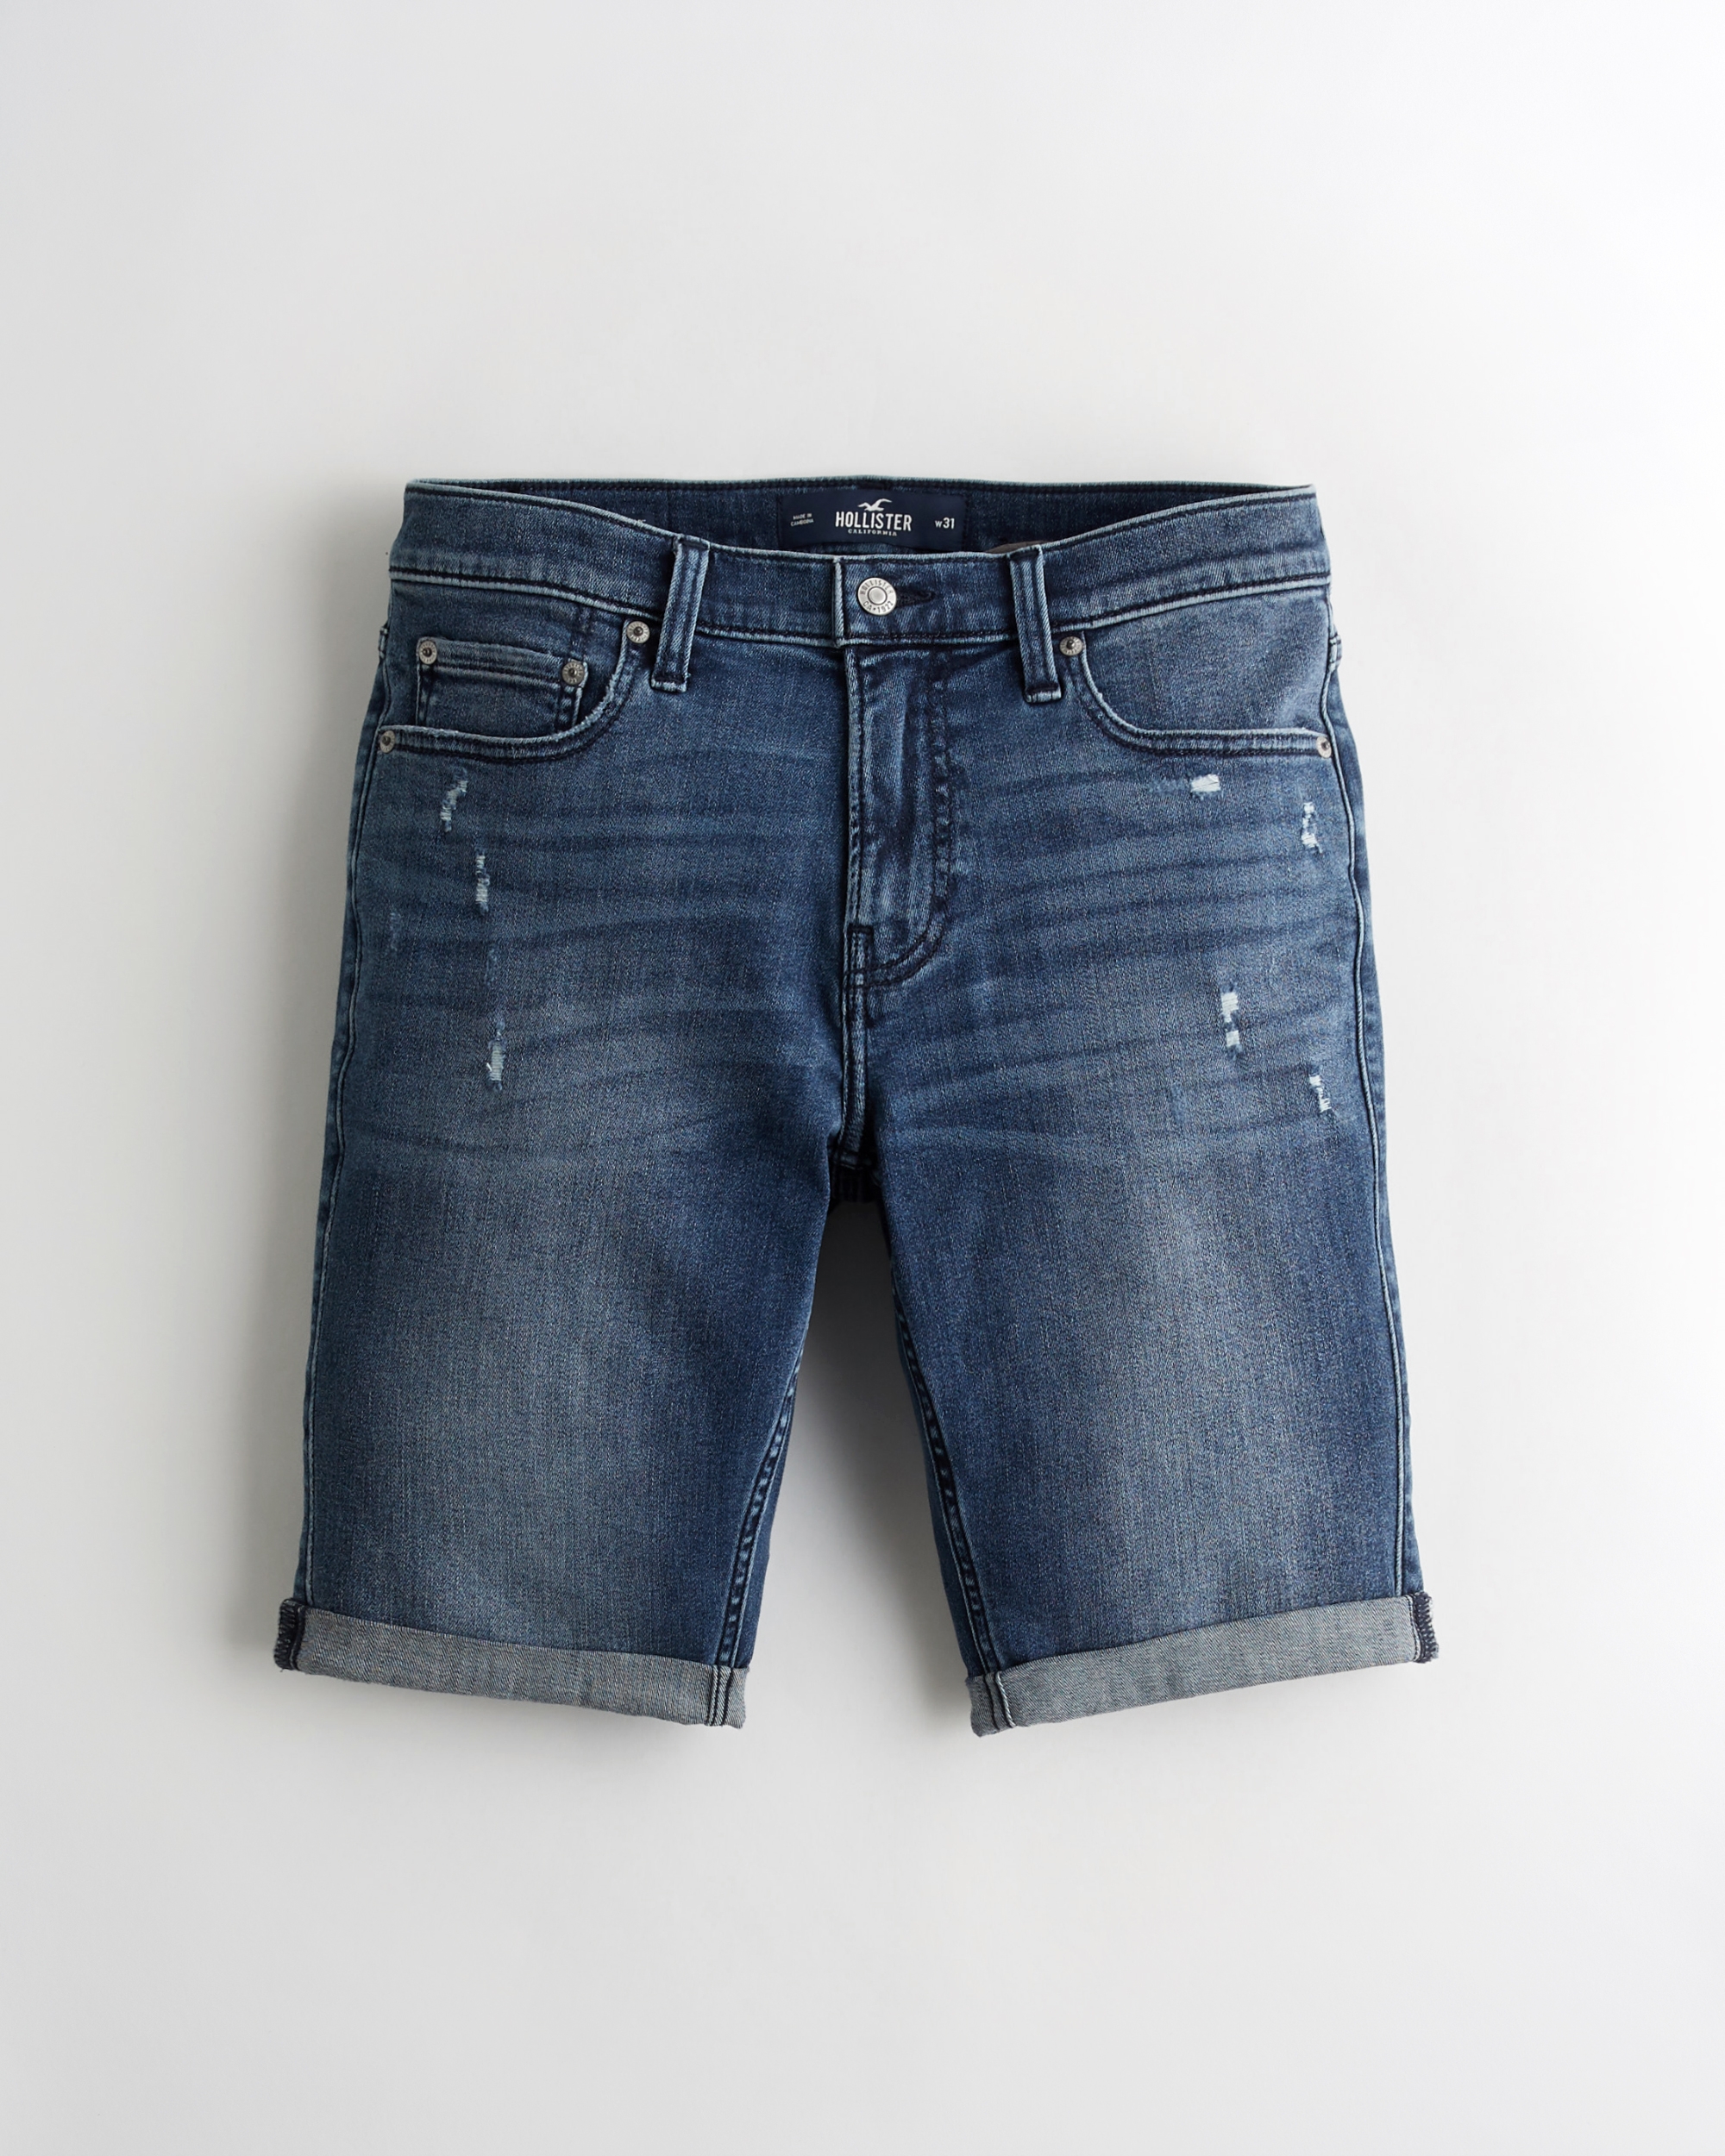 hollister jean shorts mens